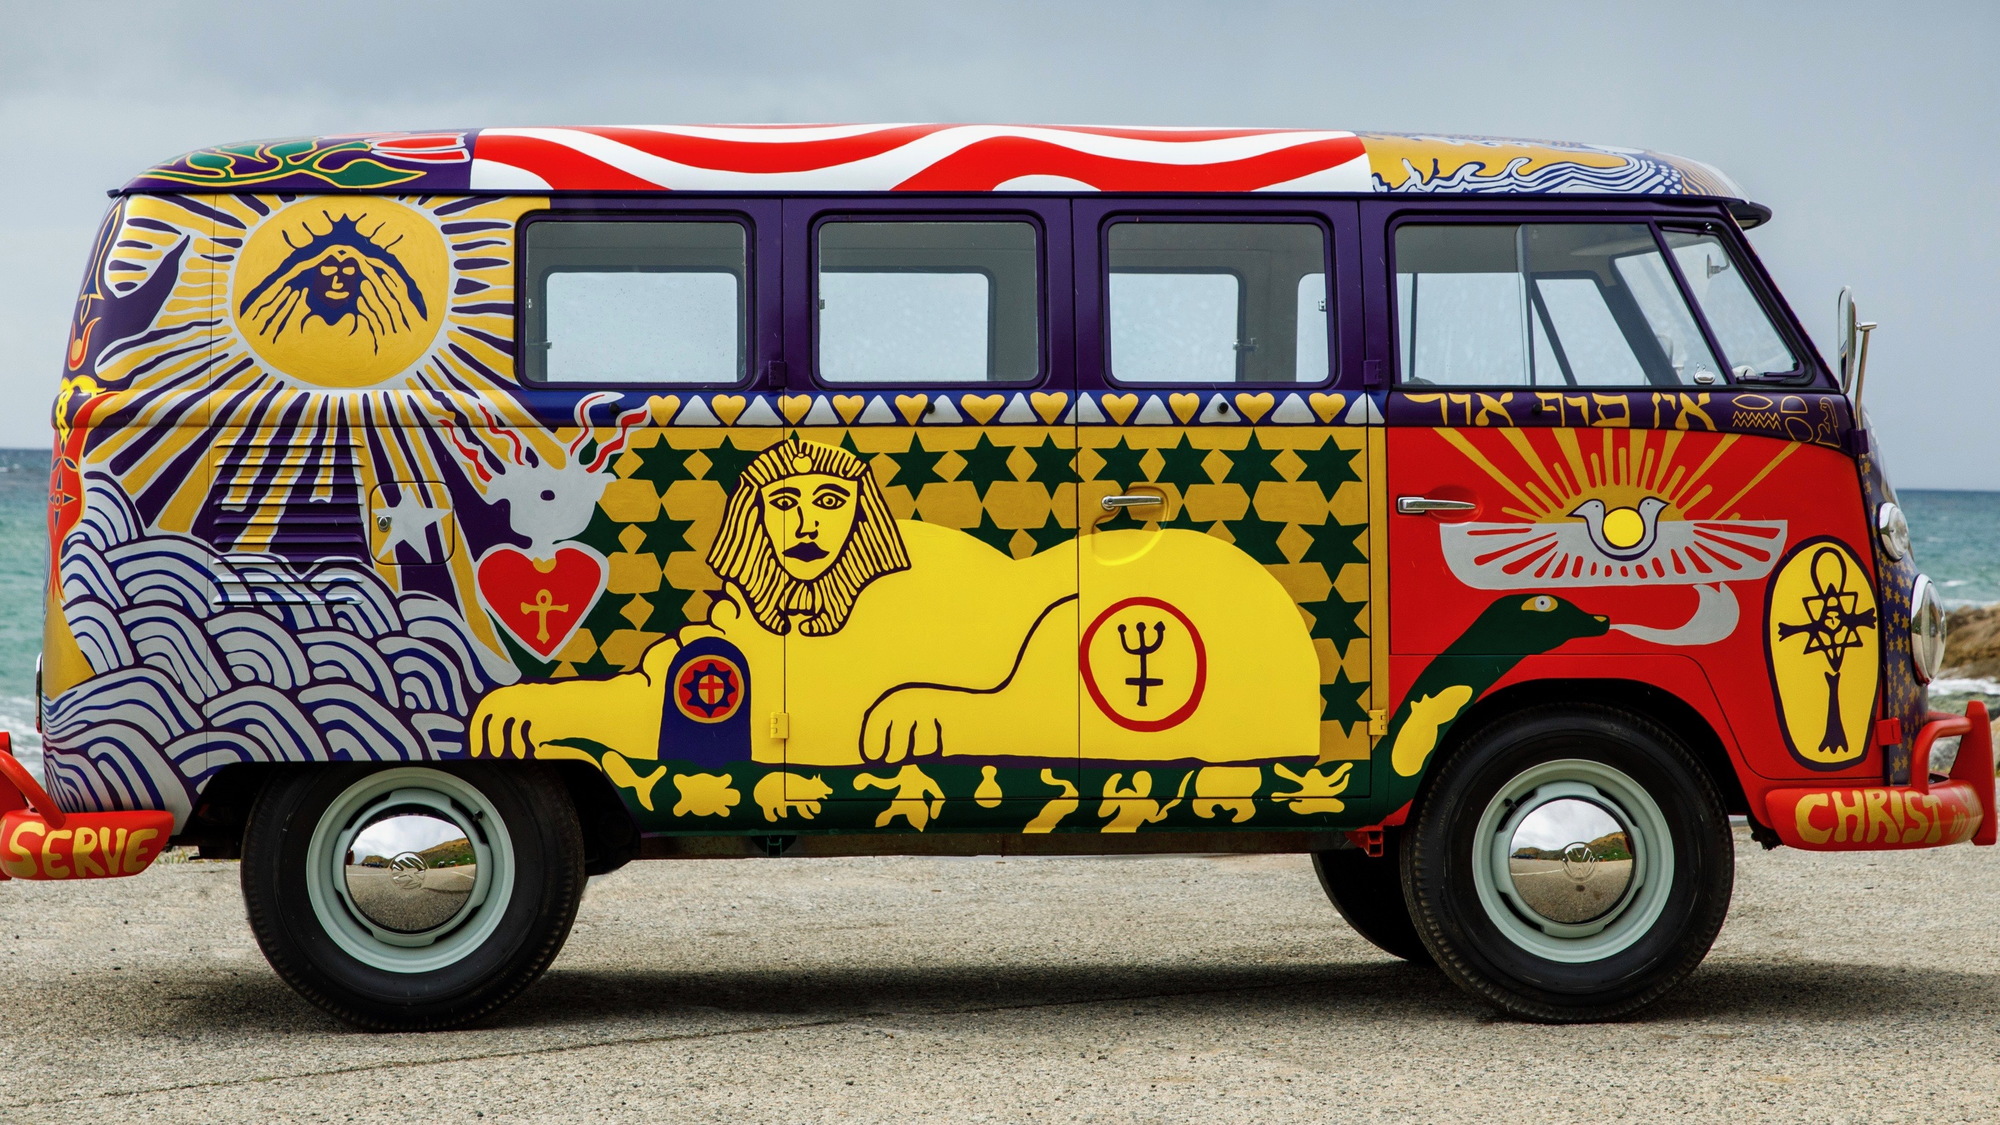 Iconic ‘Light’ VW bus of Woodstock fame